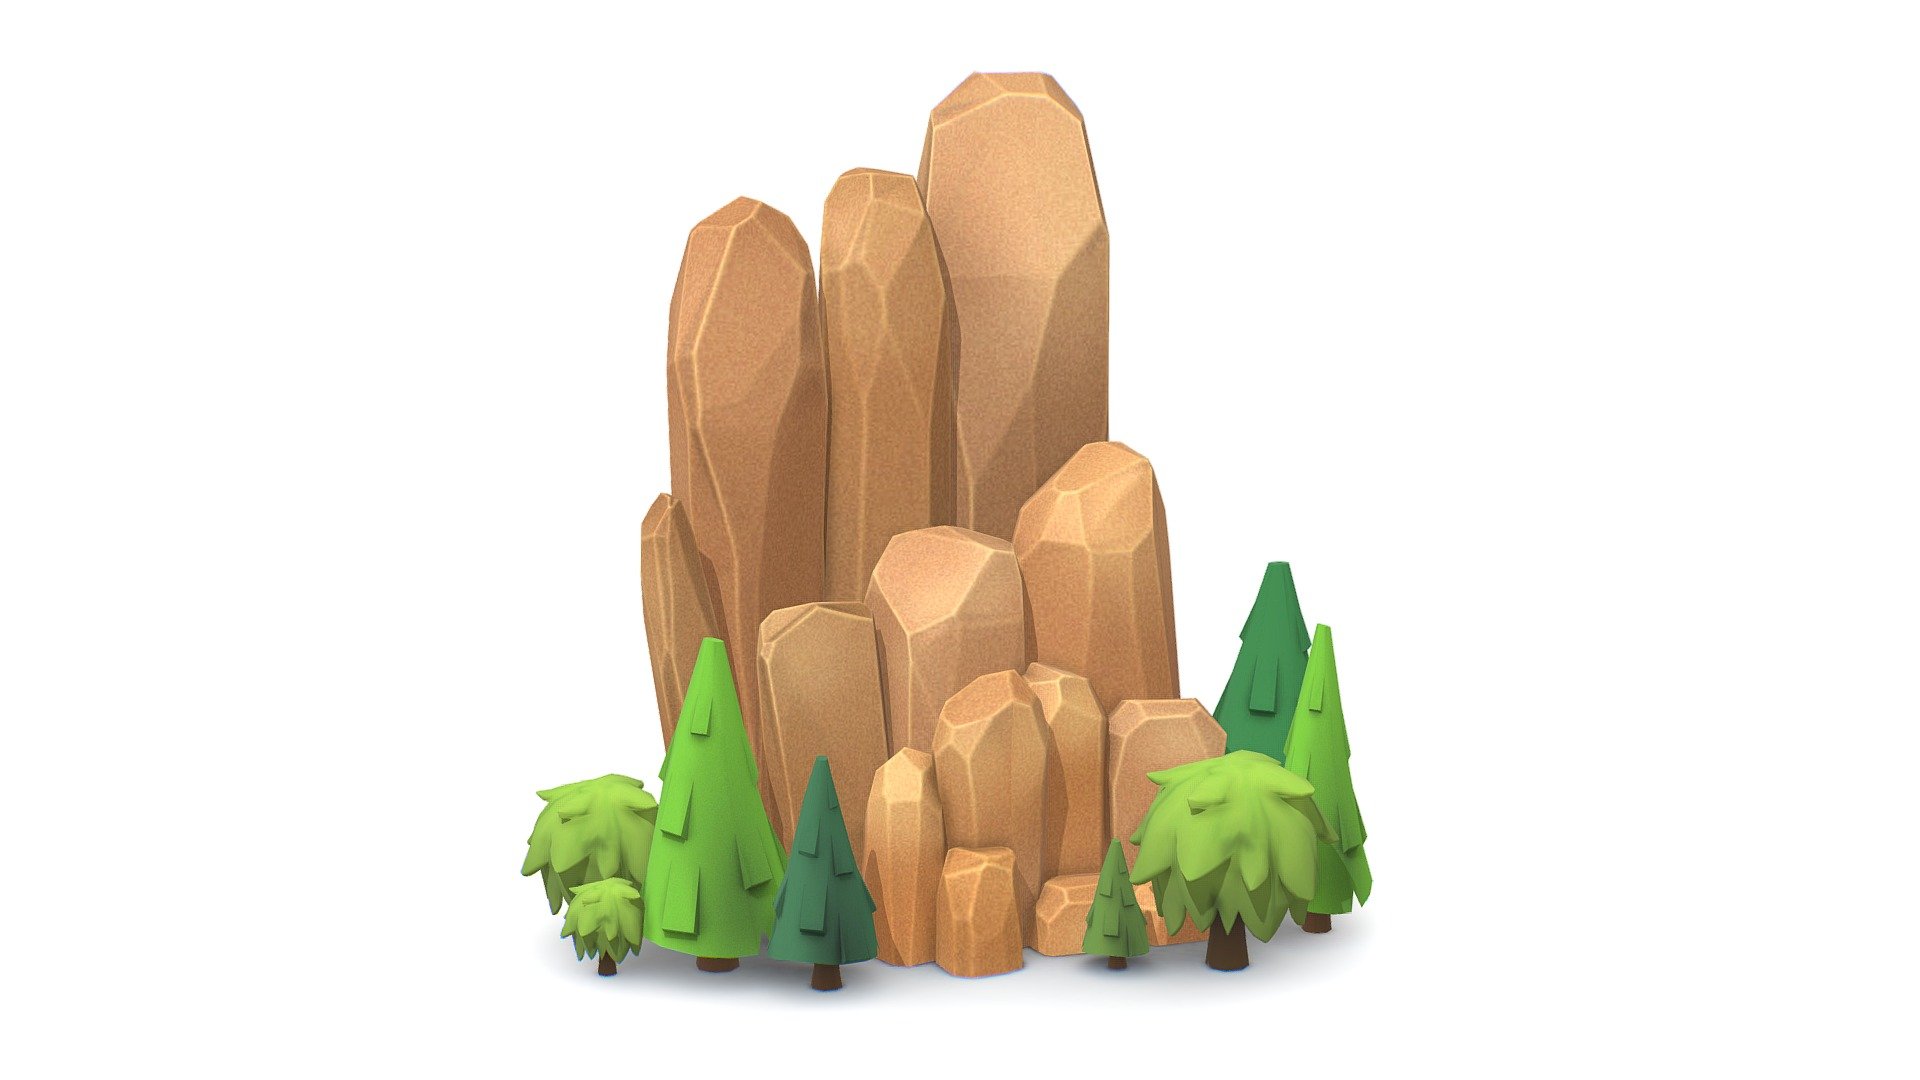 Stone 1024x1024 texture ( color and normal map
Pine Tree 1024x1024 texture
Tree 1024x1024 texture
 - Cartoon Stone Cllff and Green Trees - Buy Royalty Free 3D model by Oleg Shuldiakov (@olegshuldiakov) 3d model